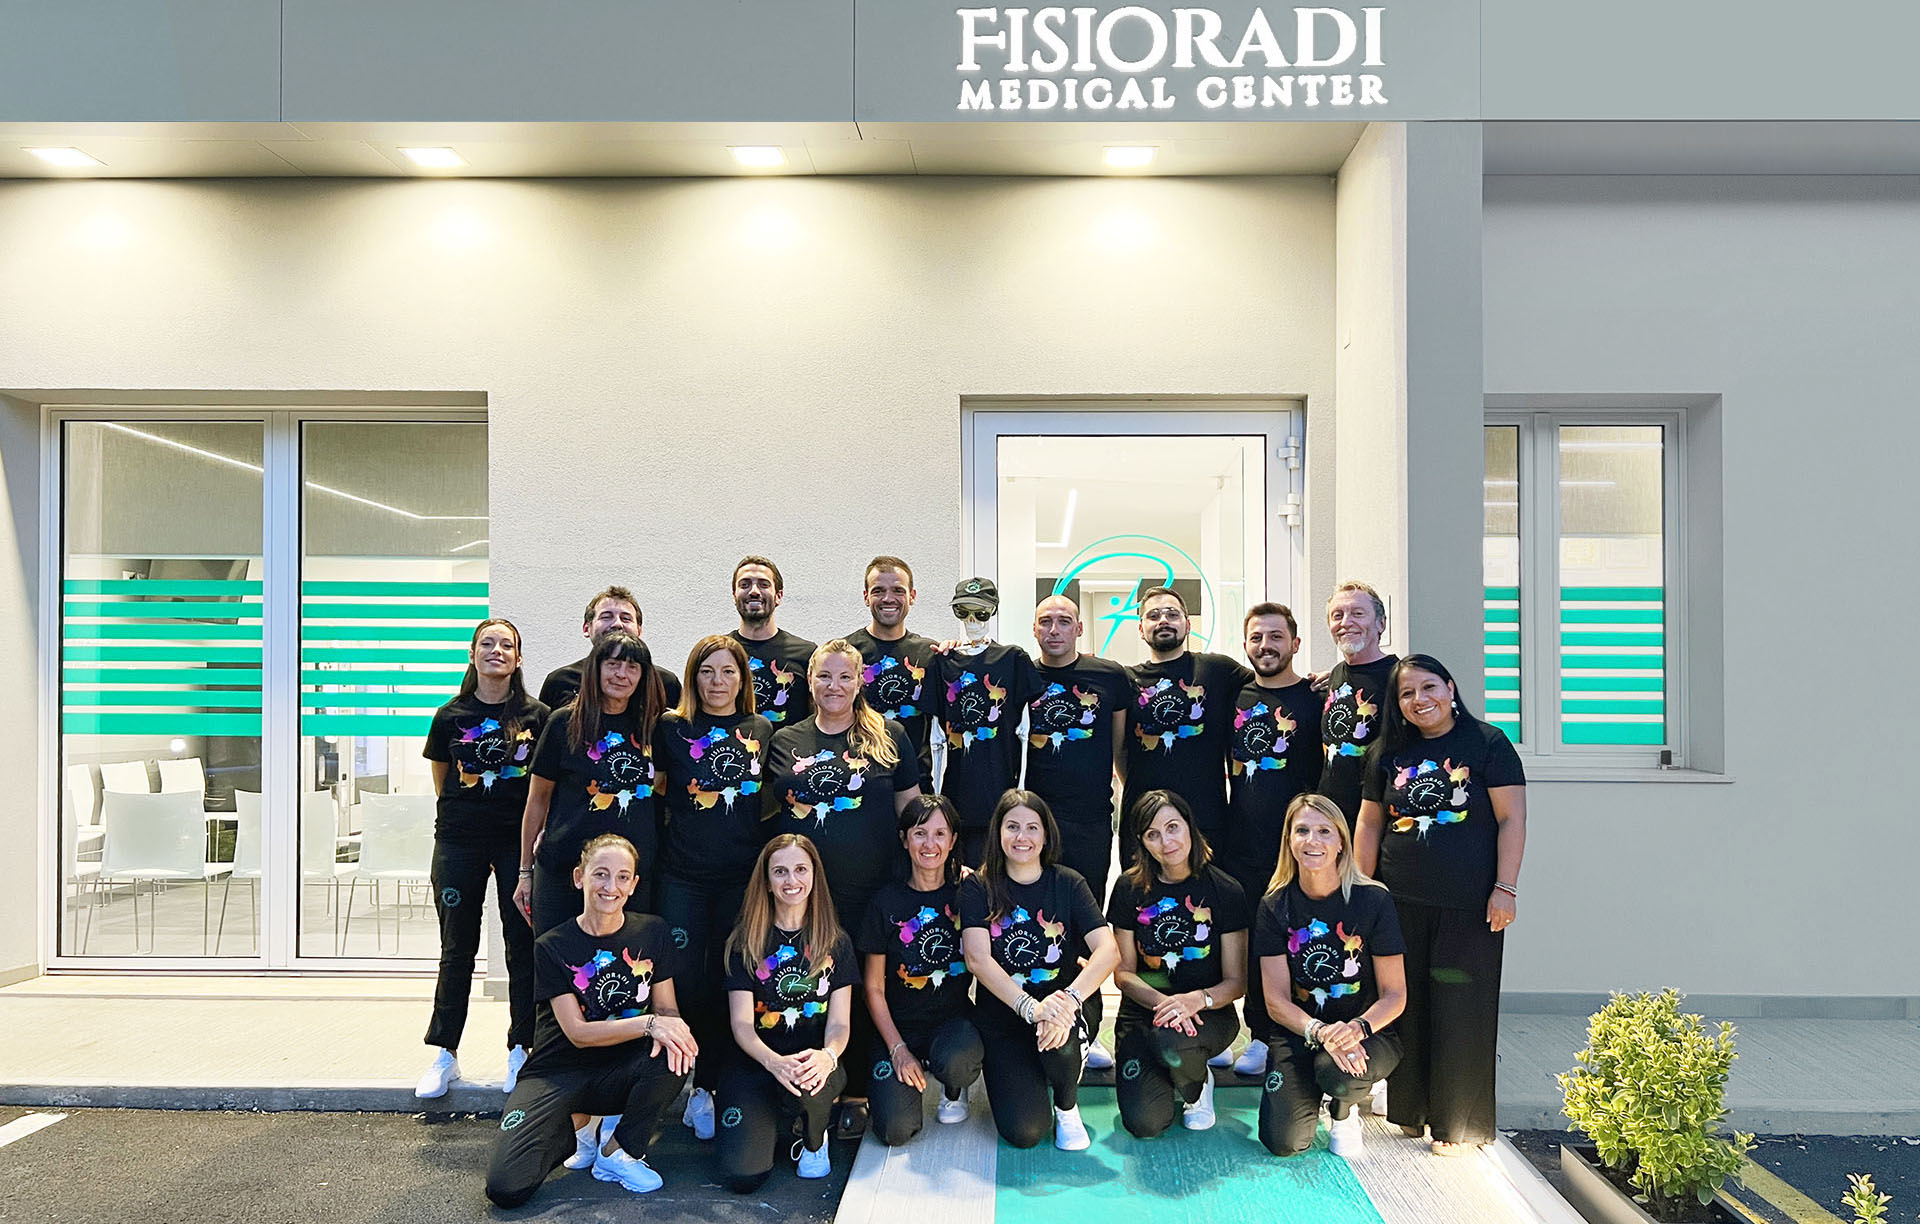 Fisioradi Medial Center Pesaro